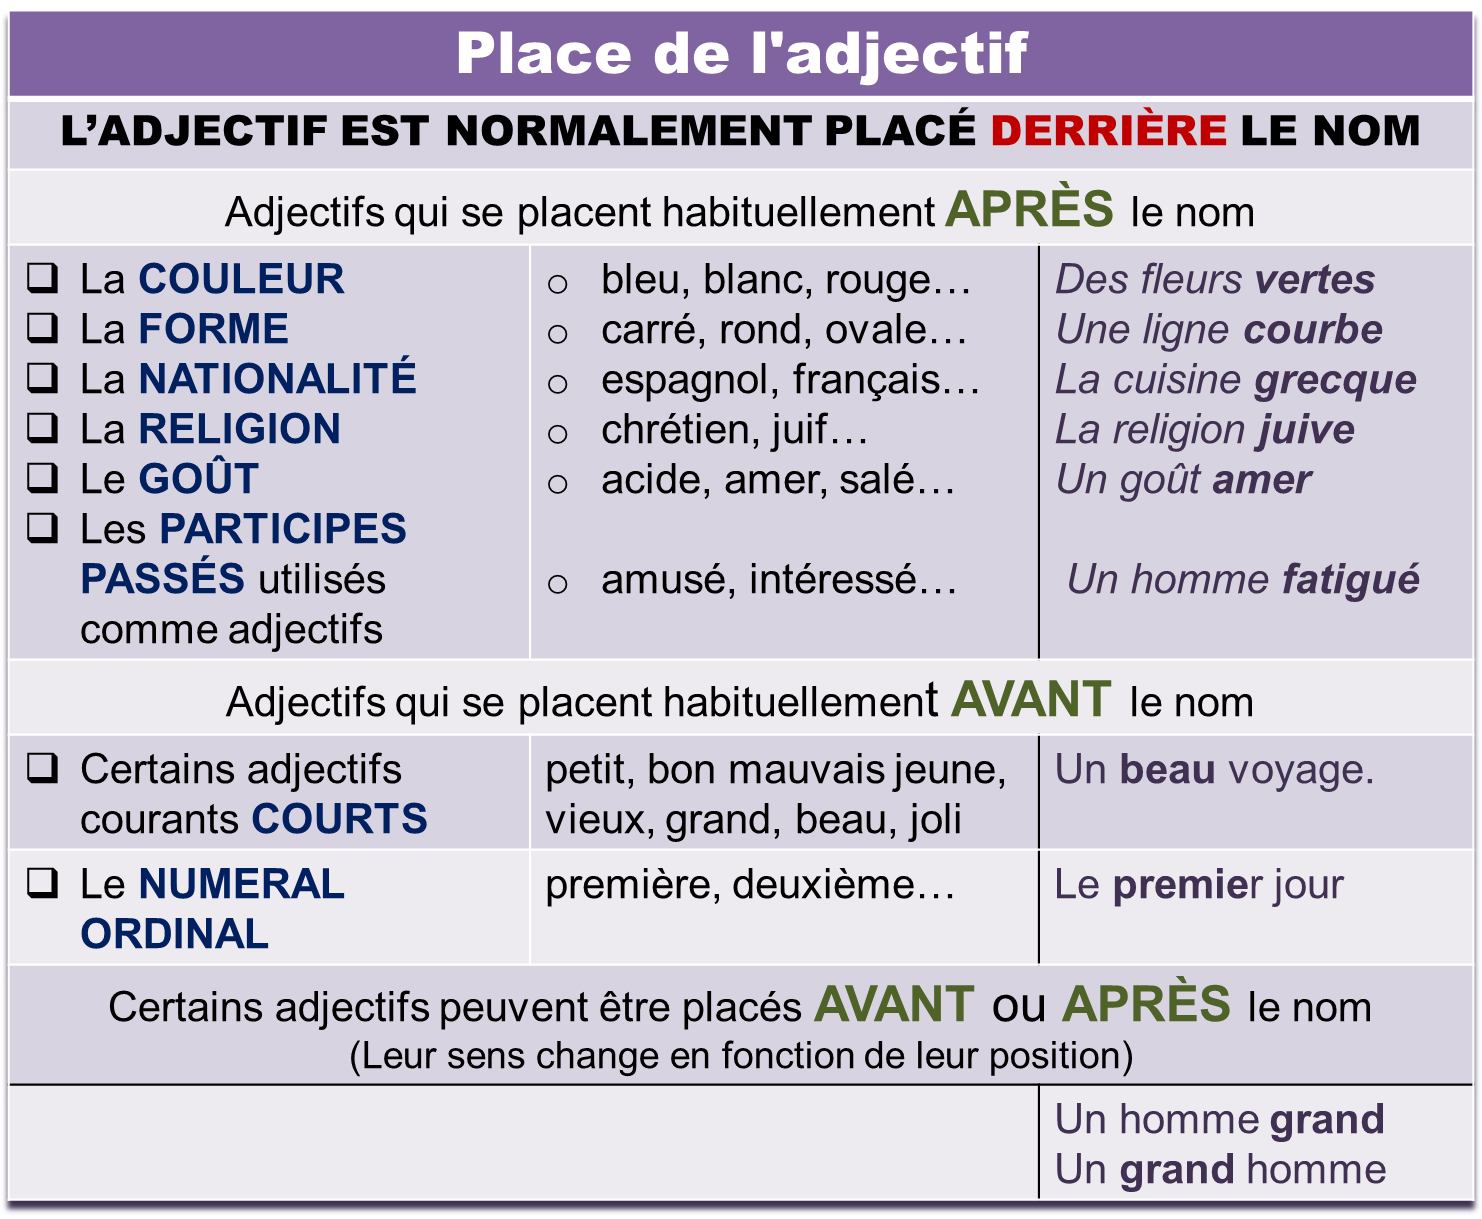 Avant перевод. Adjectif французский язык. Les adjectifs во французском. Французский прилагательные adjectifs. Сравнение во французском языке.